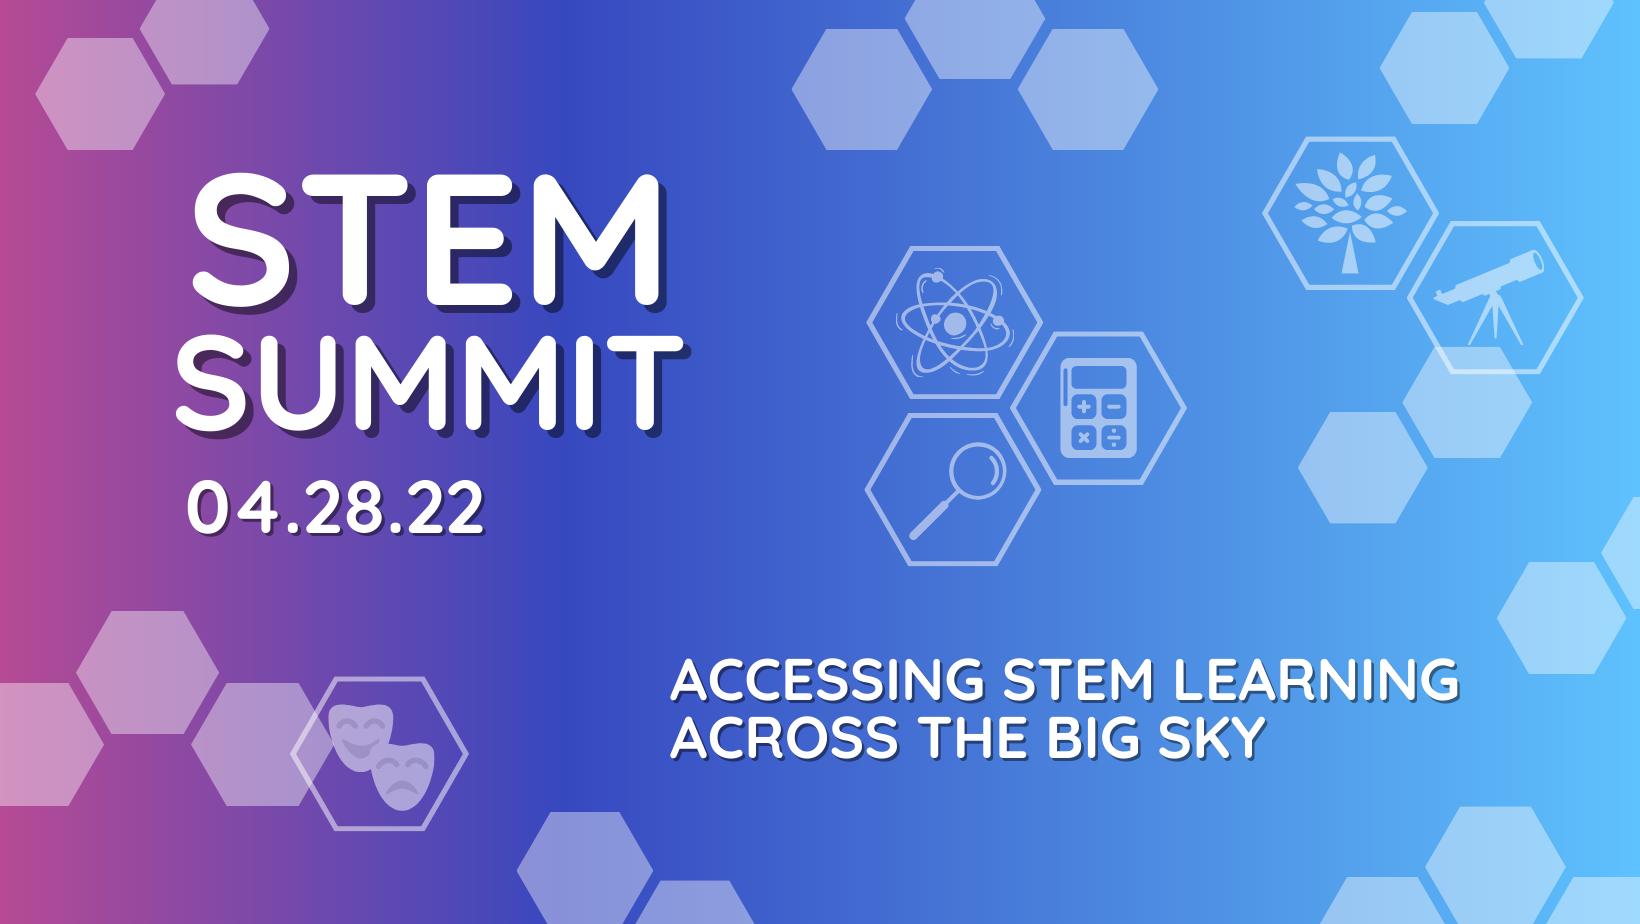 STEM Summit 2022